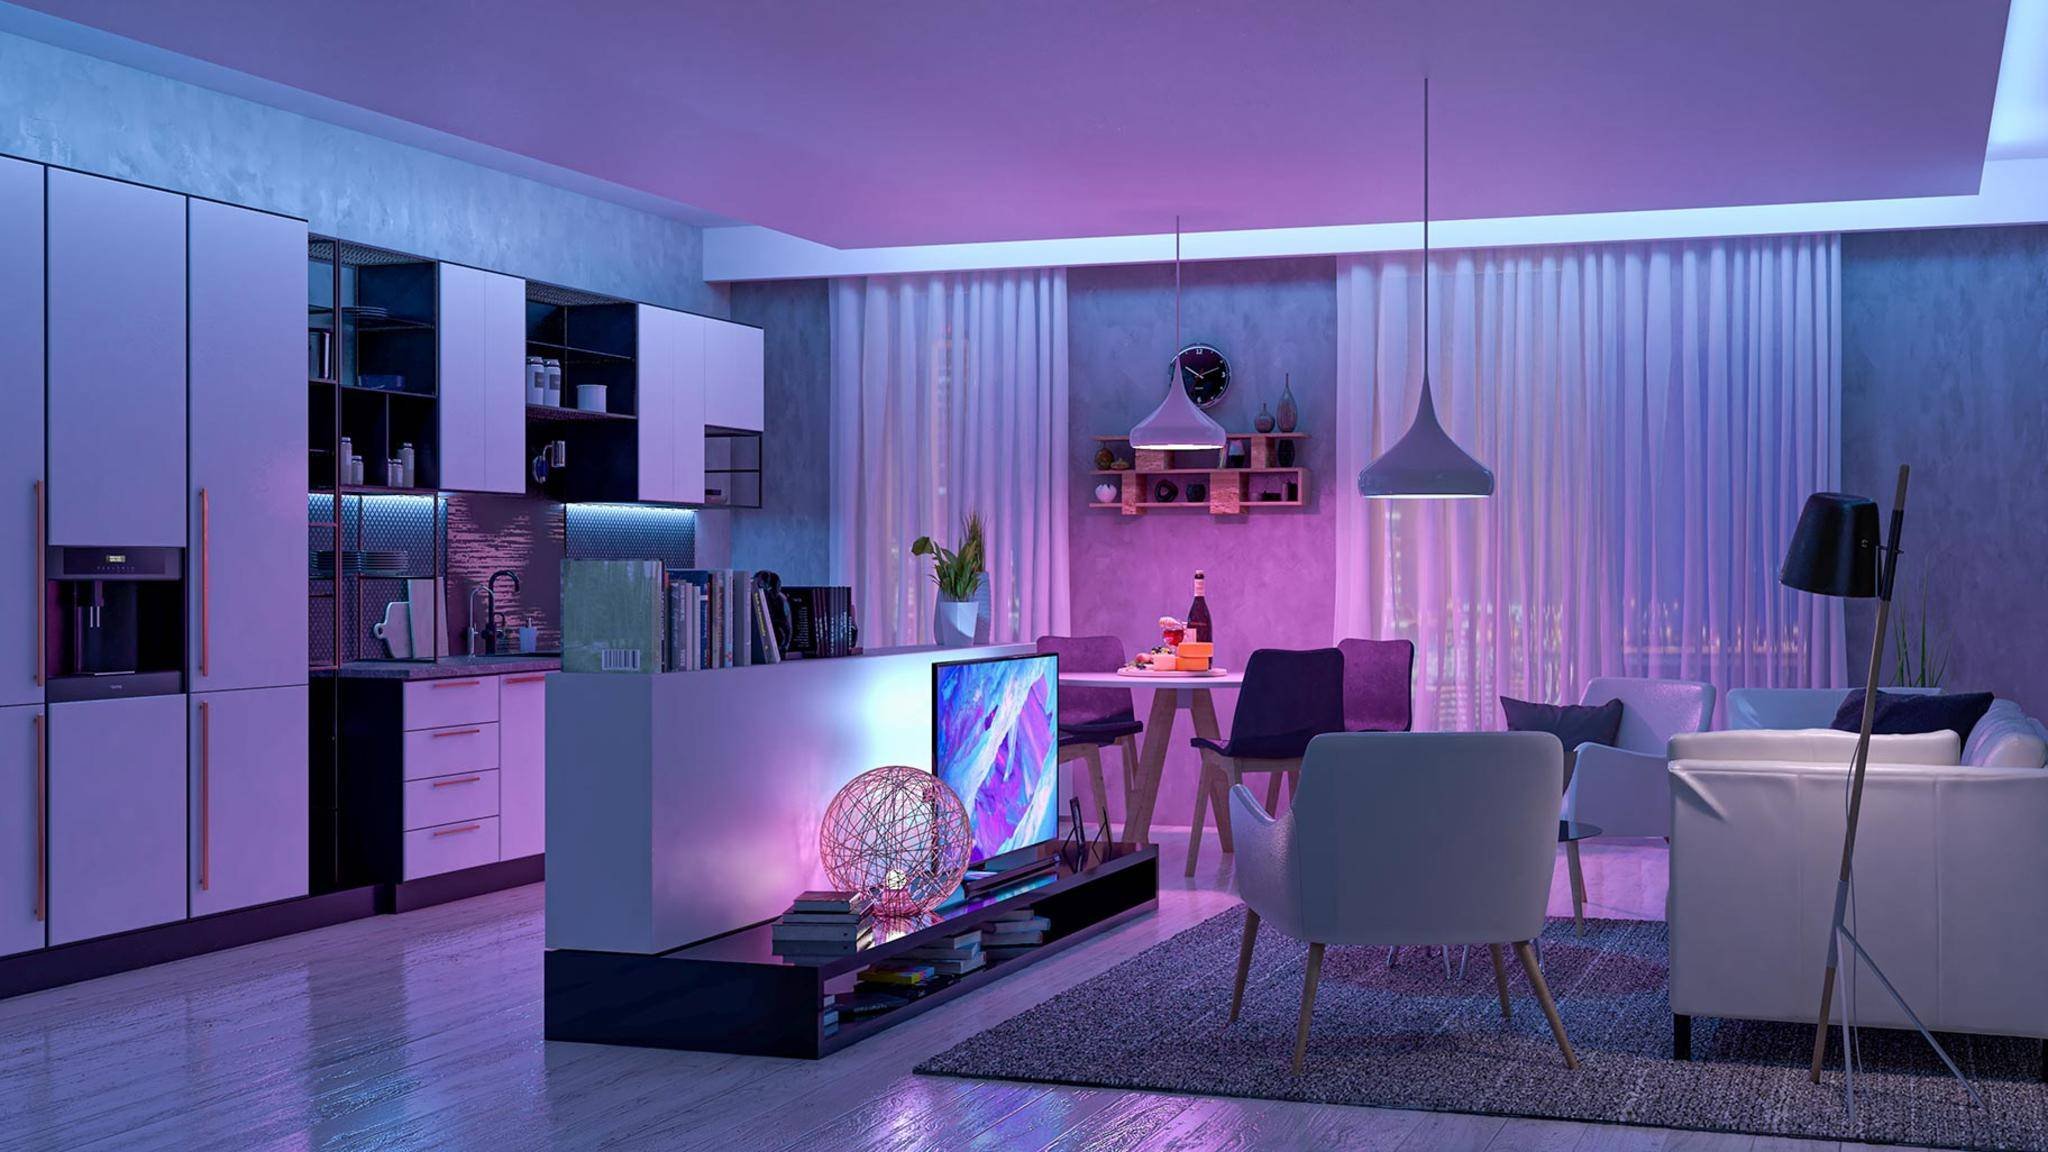 A subtle lighting setup for a living room and kitchen